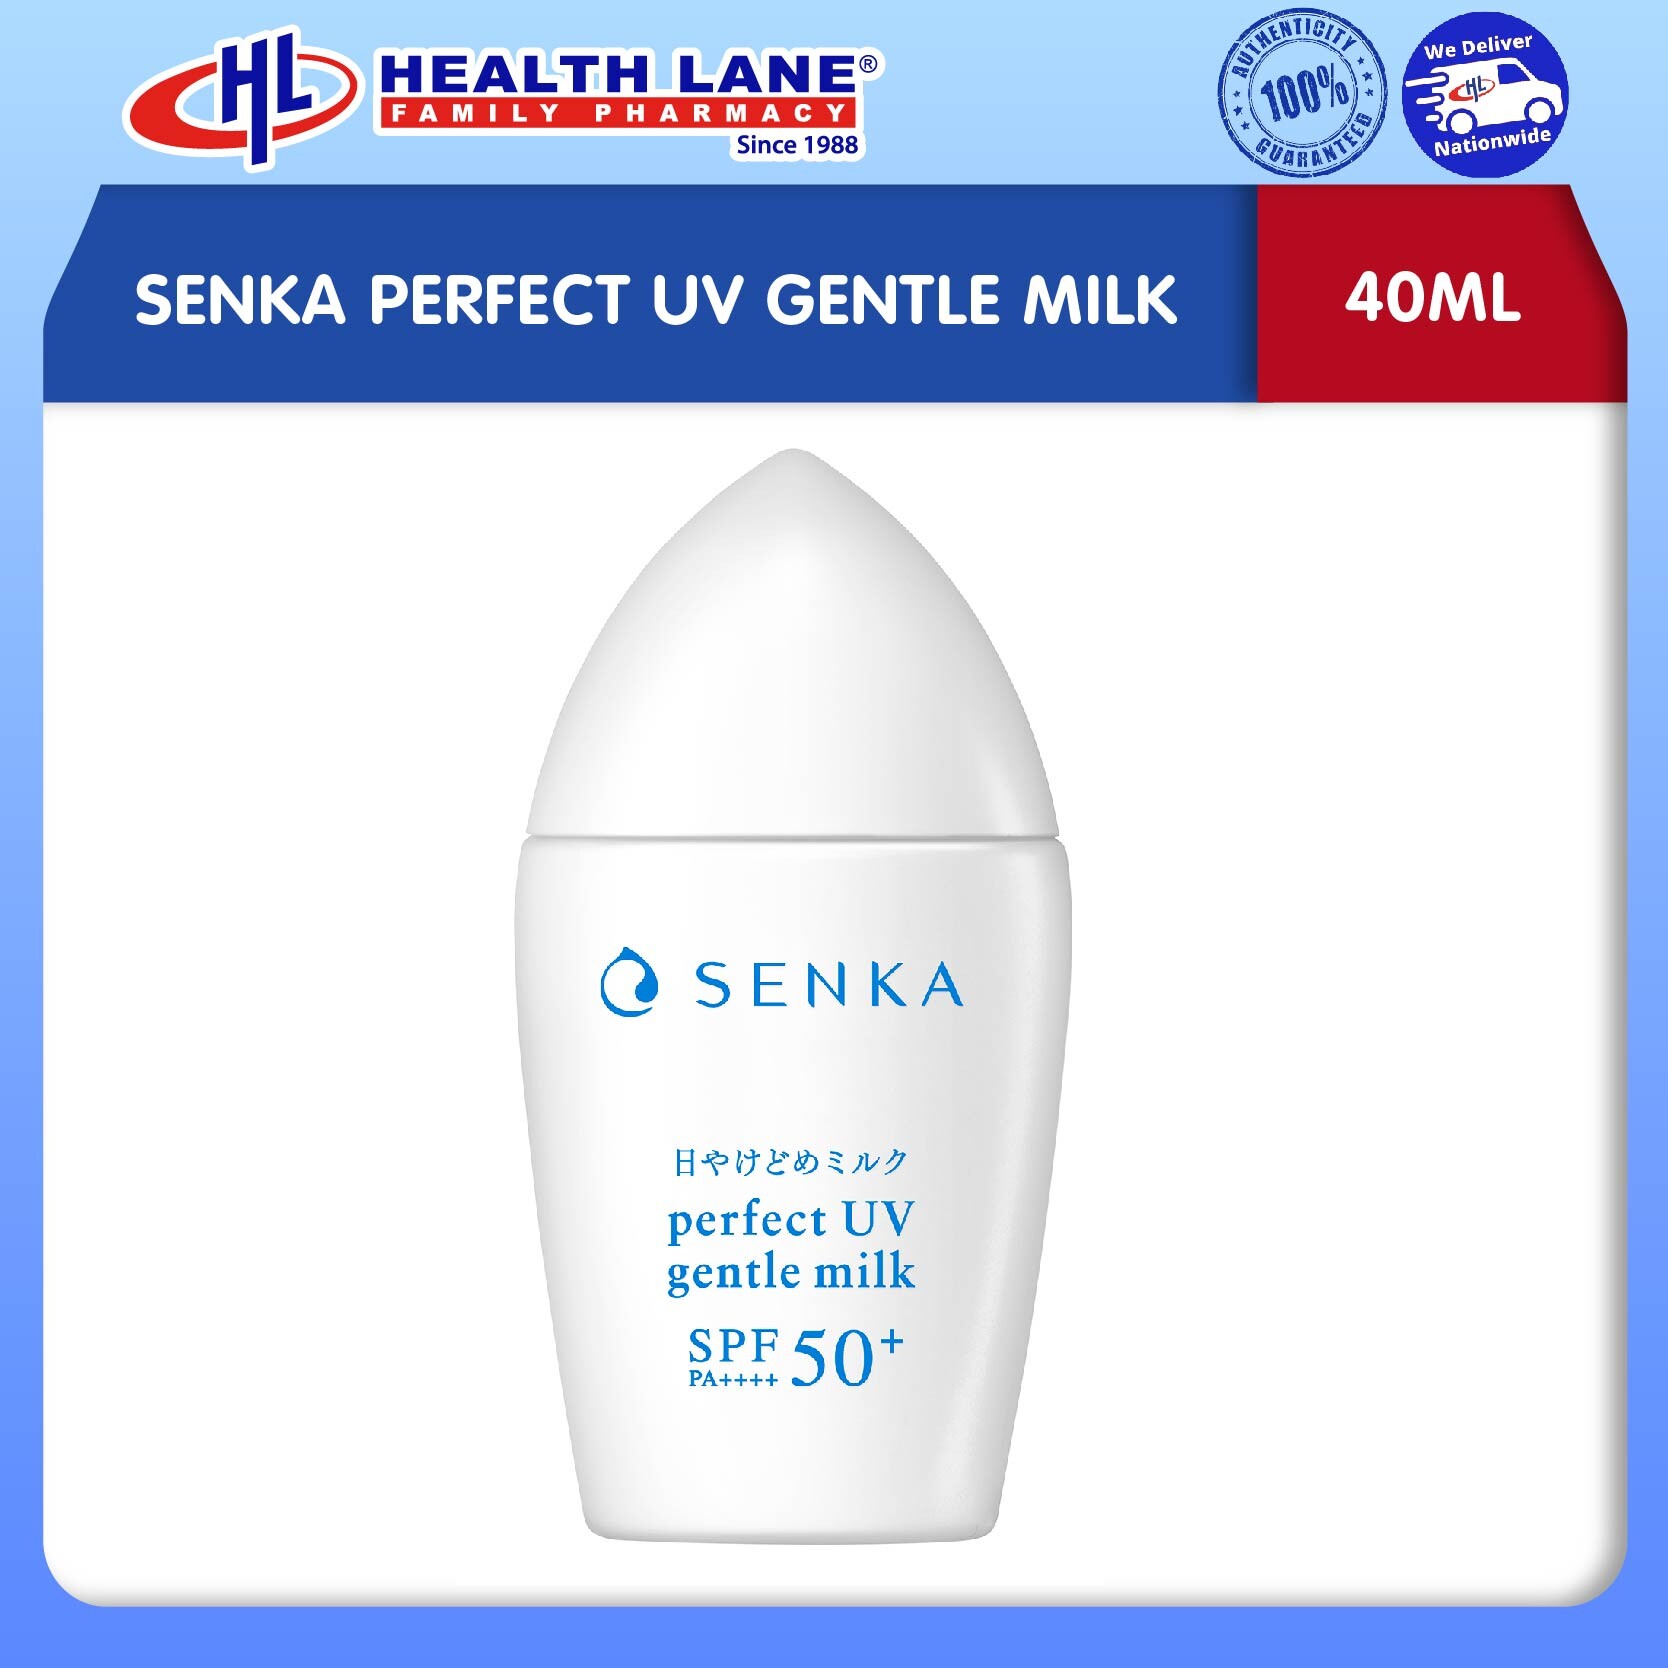 SENKA PERFECT UV GENTLE MILK (40ML)